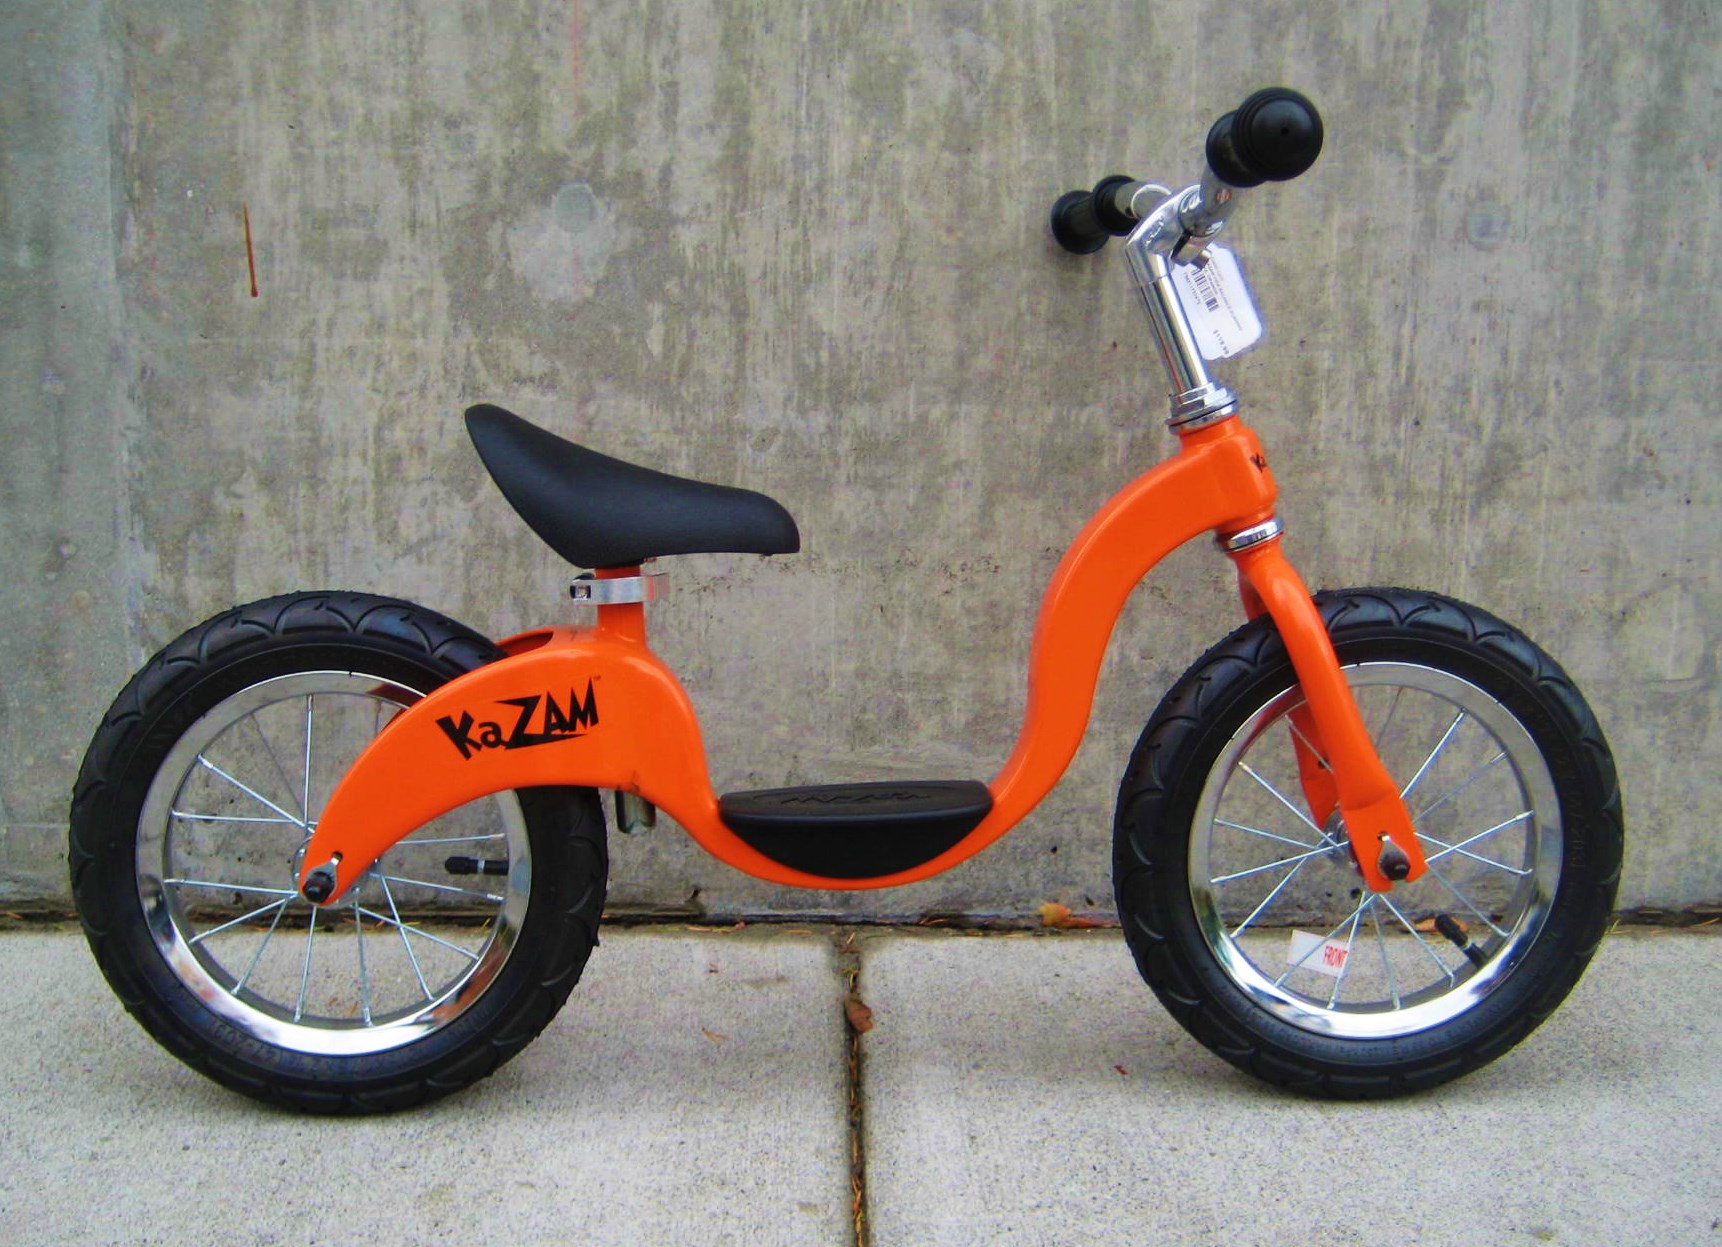 kazam strider bike